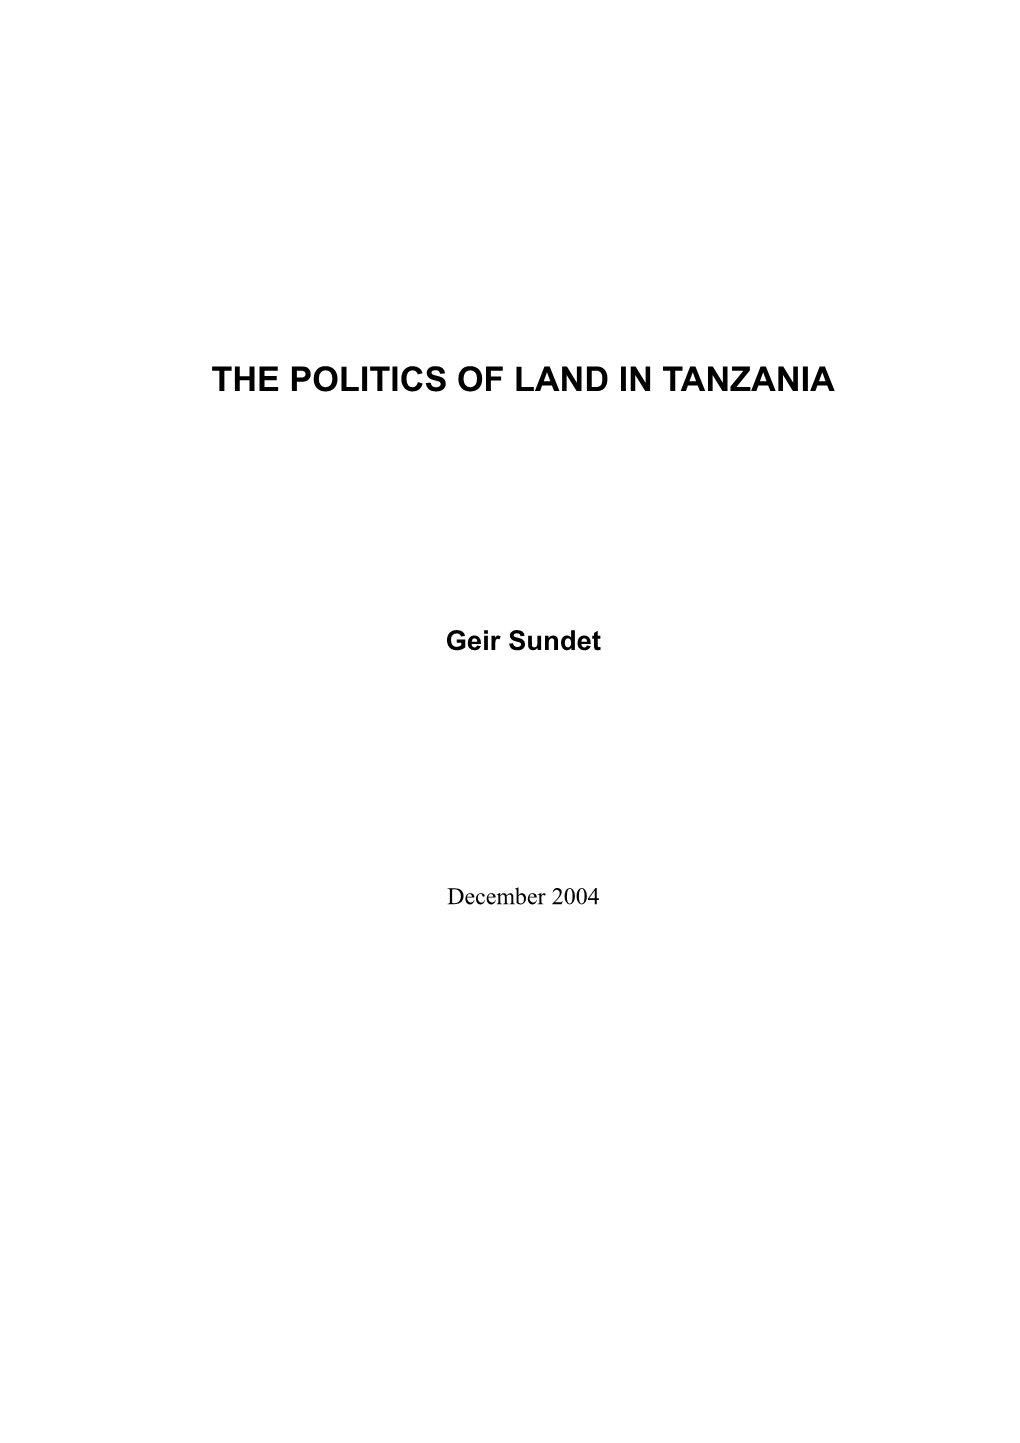 Politics of Land in Tanzania